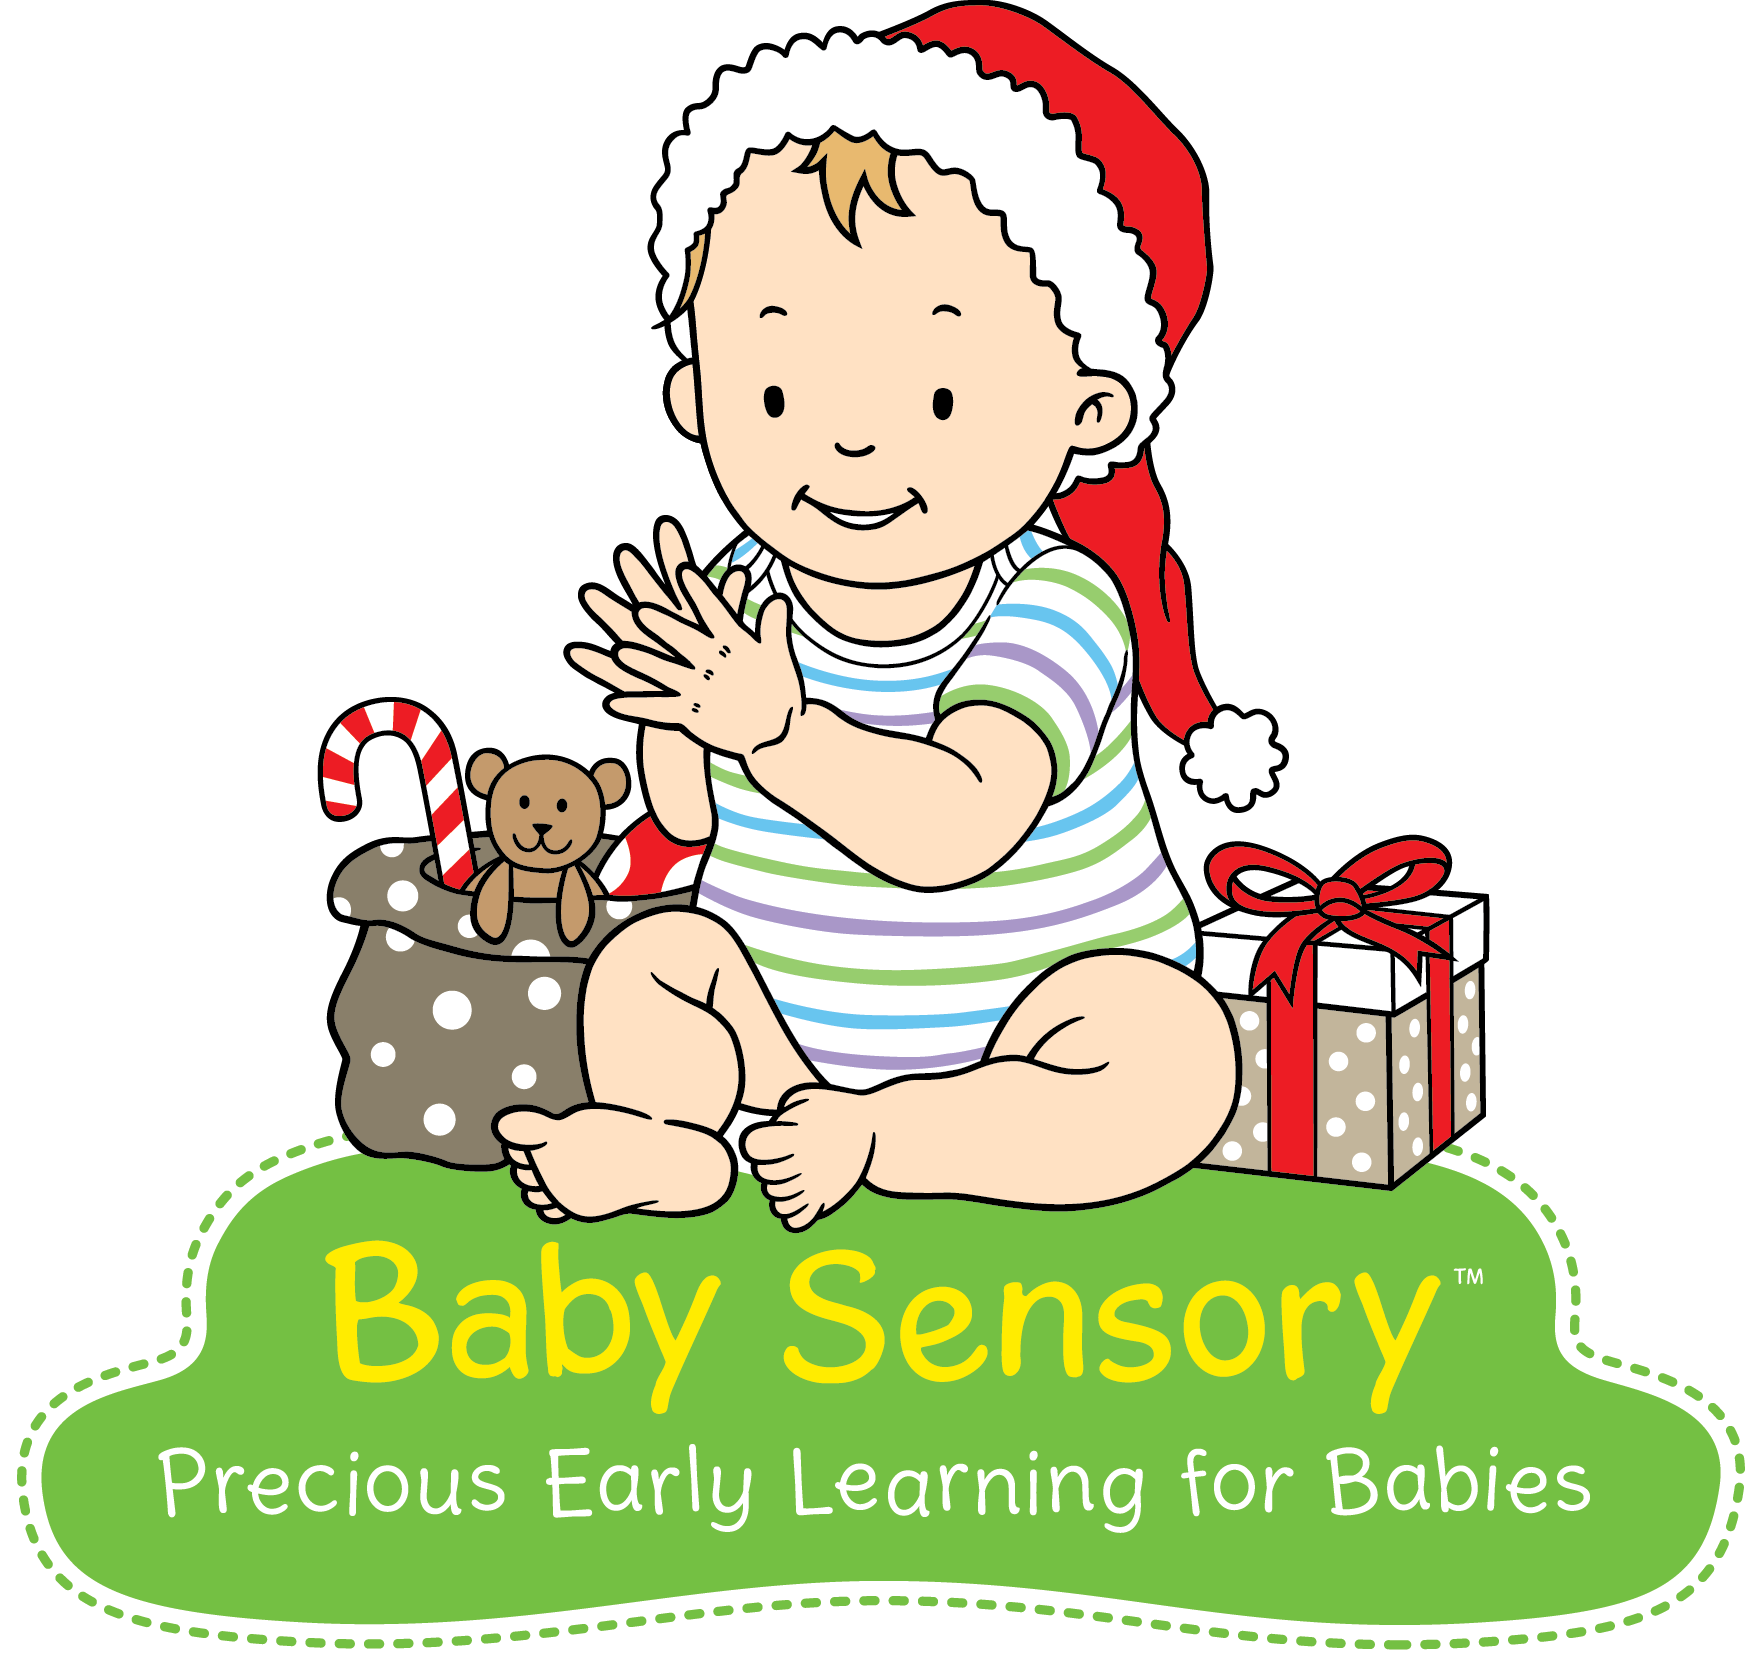 Bundles, Our Christmas Cd, Innovative Gift Ideas, And - Baby Sensory (1762x1666)